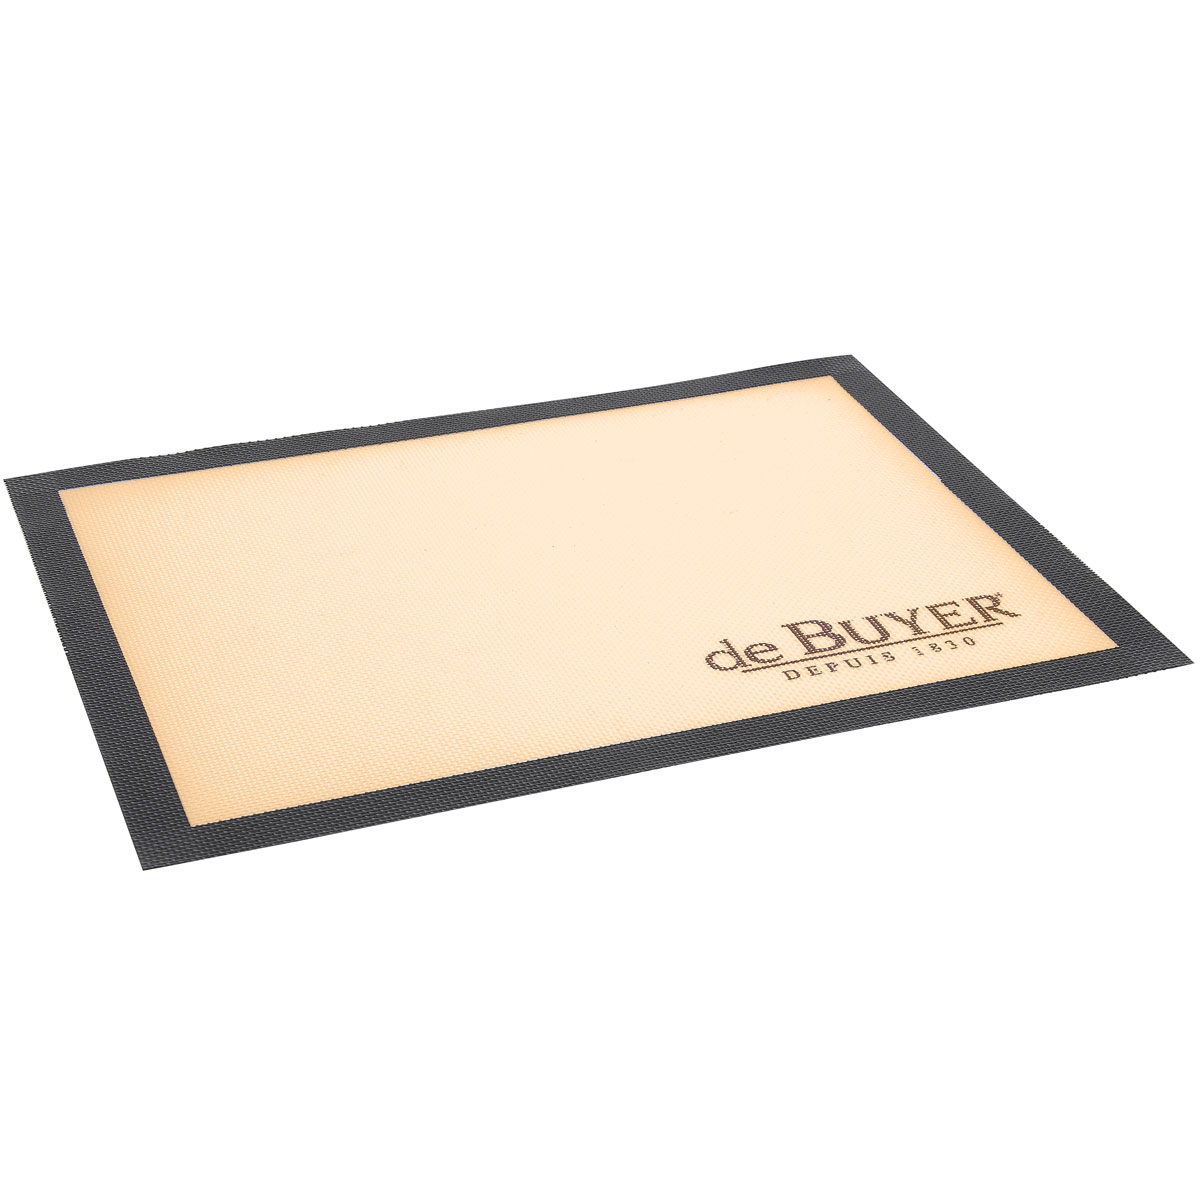 de Buyer Patisserie Silikon-Backmatte Airmat gelocht 40x30 cm / mit Antihaft-Eigenschaften